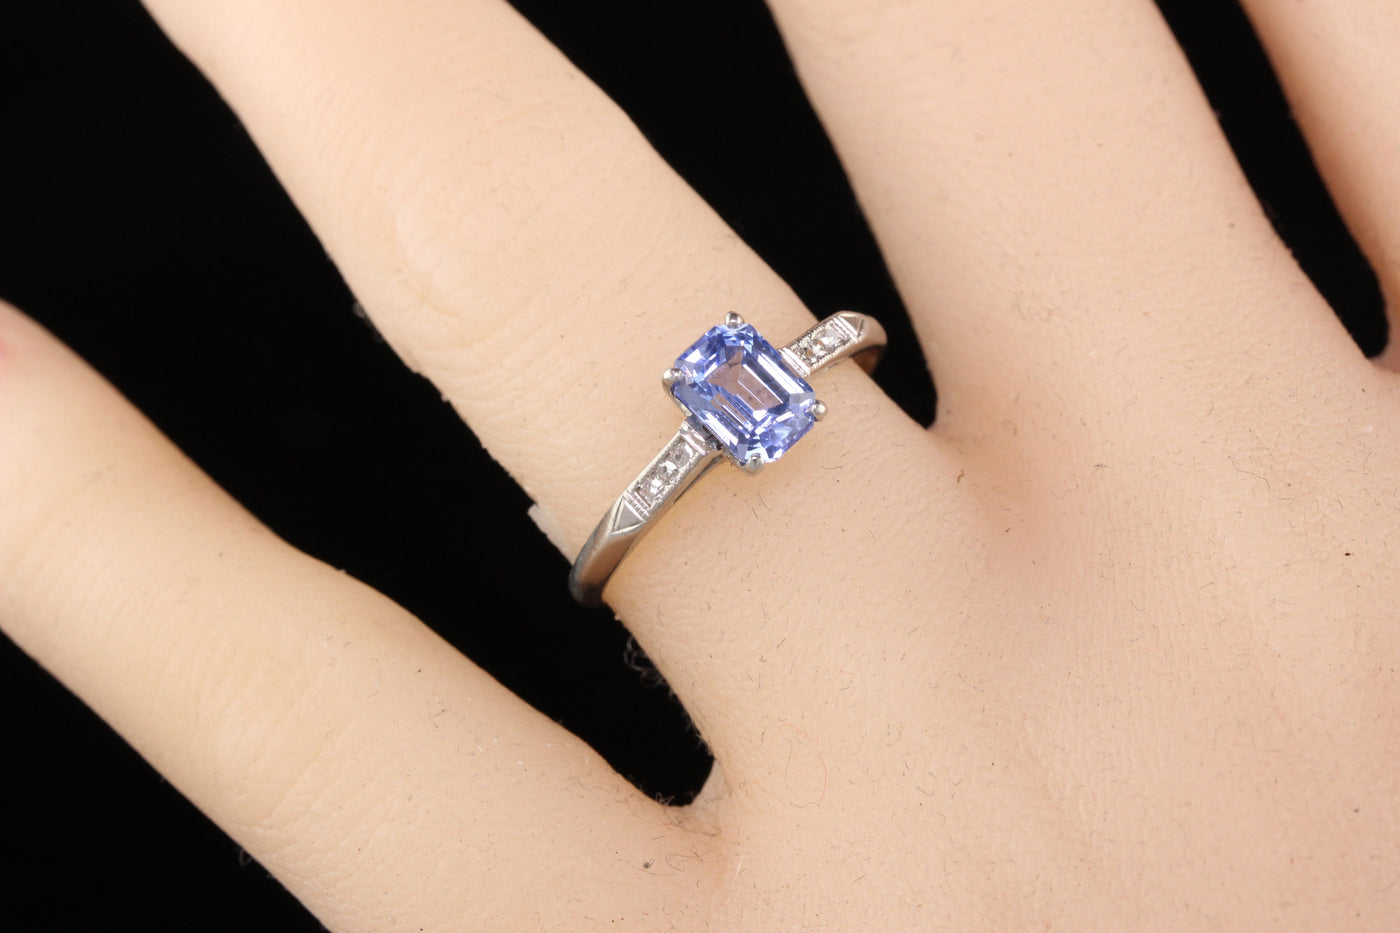 Antique Art Deco Palladium Emerald Cut Sapphire Diamond Engagement Ring